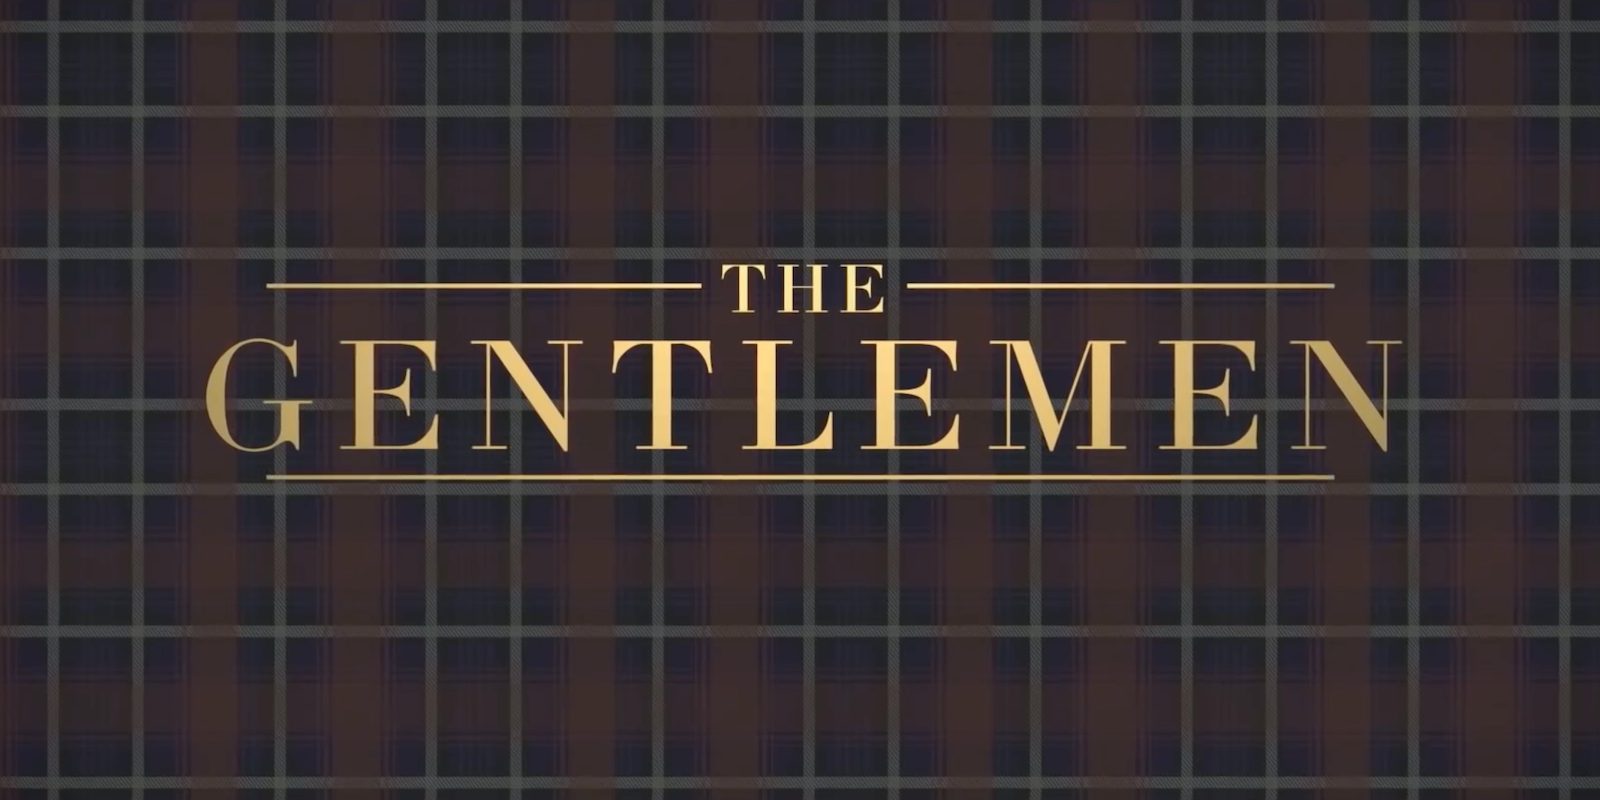 Matthew McConaughey Loves Weed in Trailer for Guy Ritchie's The Gentlemen1600 x 800